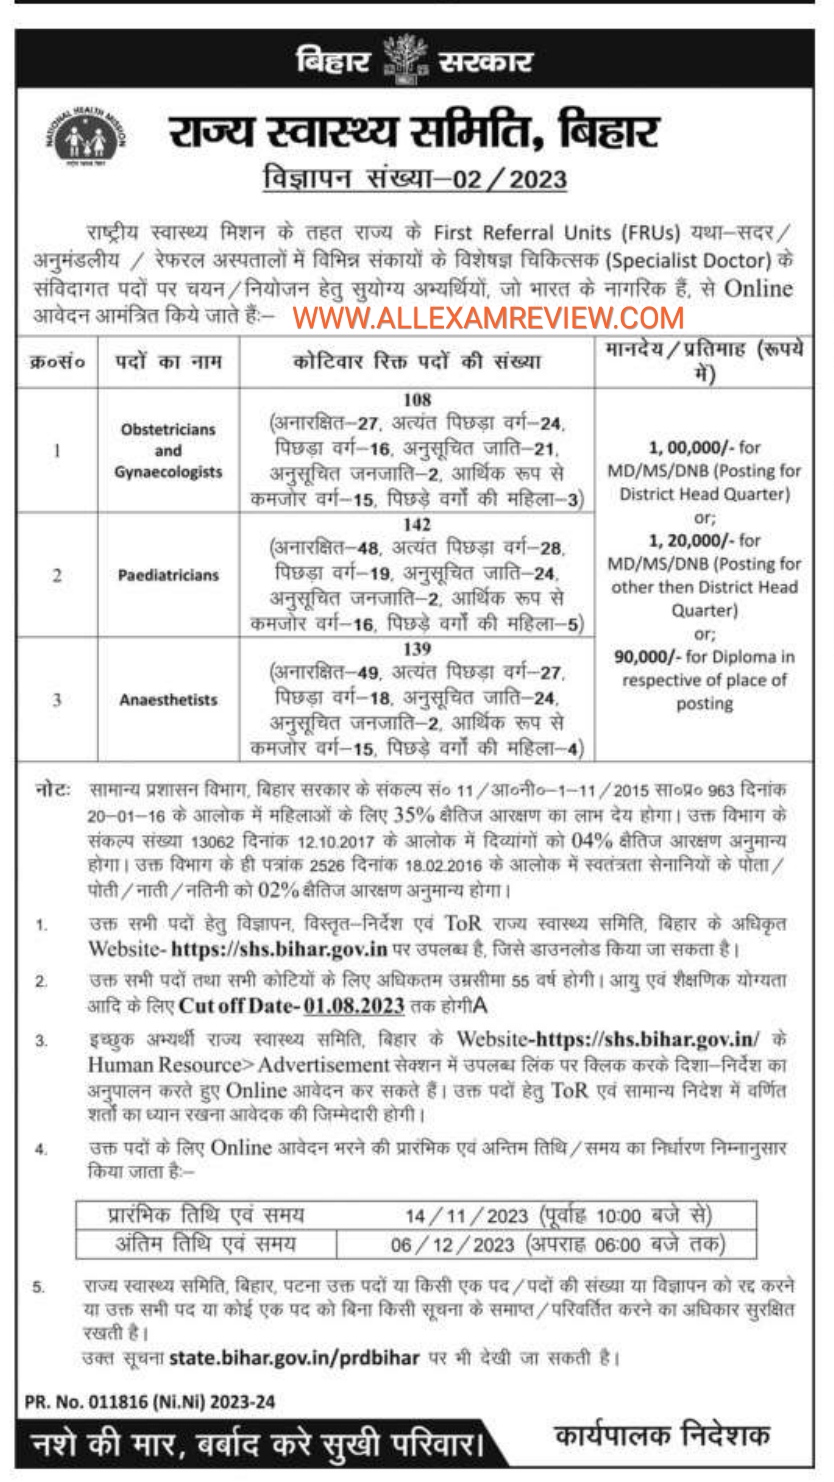 State Health Society Bihar Recruitment 2023